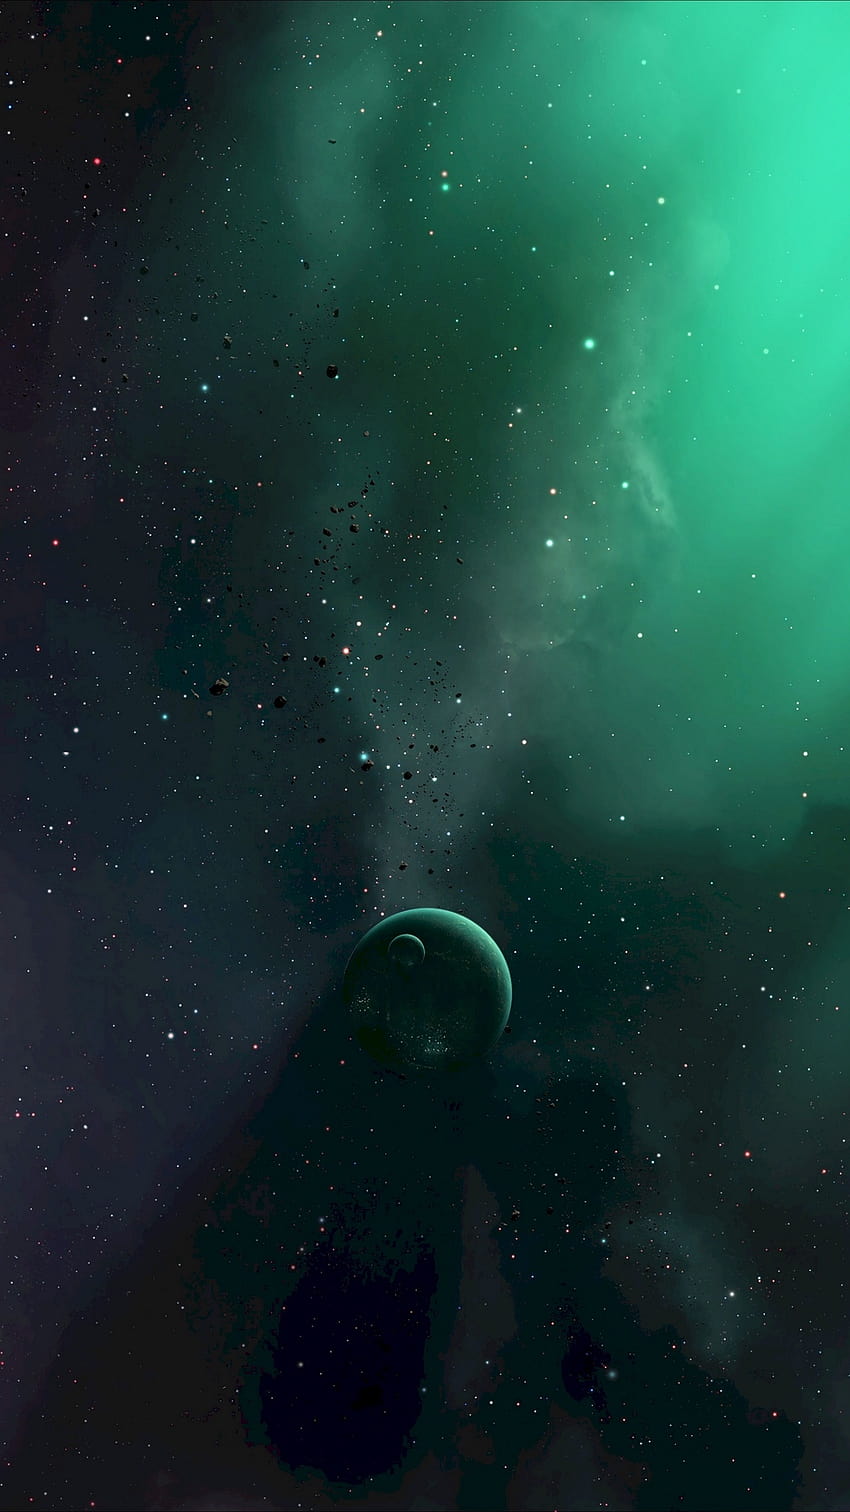 Planet, luar angkasa, bintang, alam semesta, galaksi, luar angkasa – Latar Belakang Keren, planet hijau iphone wallpaper ponsel HD